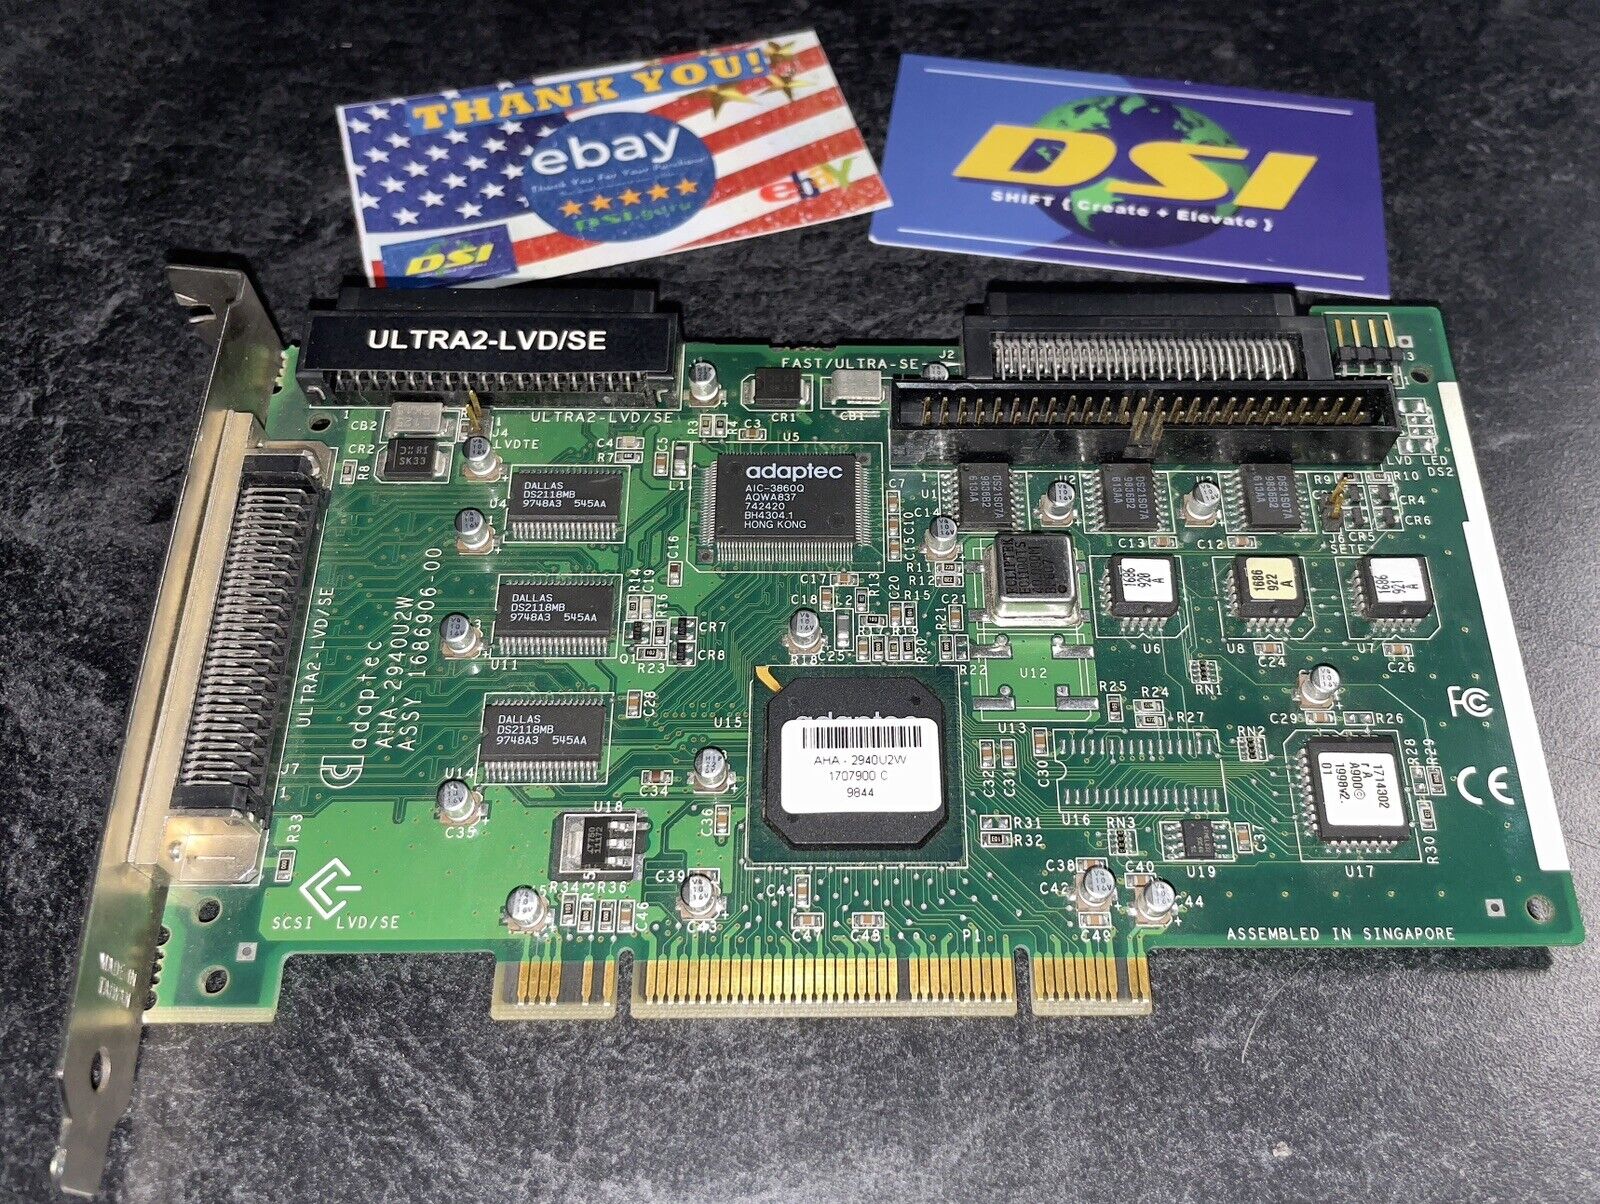 ADAPTEC AHA-2940U2W Fast Ultra2-LVD/SE SCSI PCI Controller Adapter 68pin 50Pin